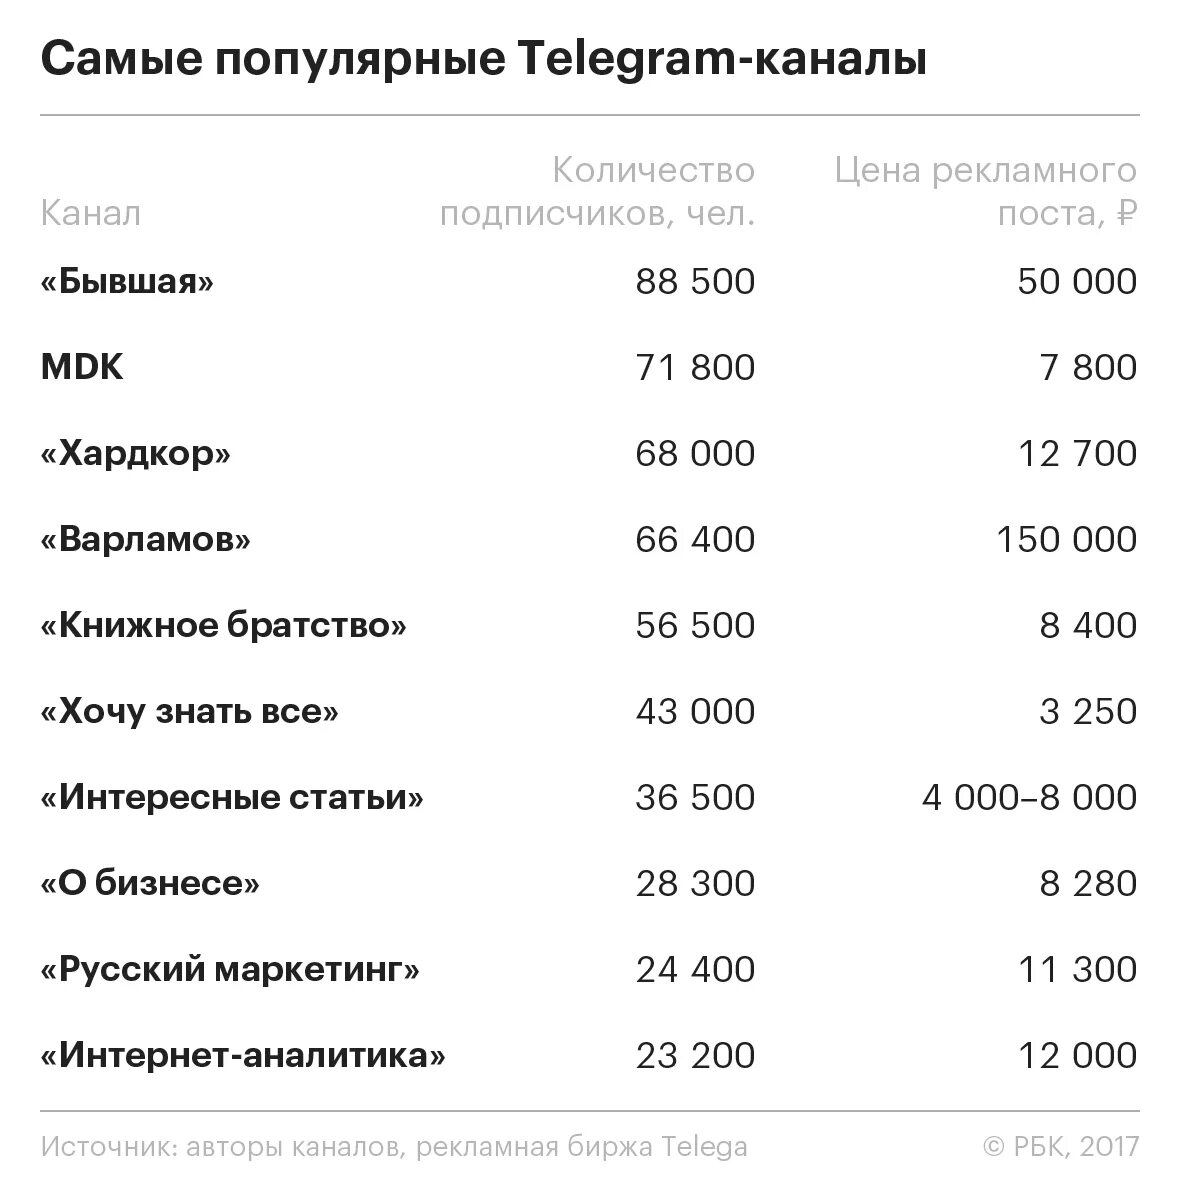 Активные тг каналы. Самый популярный Telegram канал. Популярные телеграм каналы. Самые популярные телеграм каналы. Популярныемканалы телеграм.